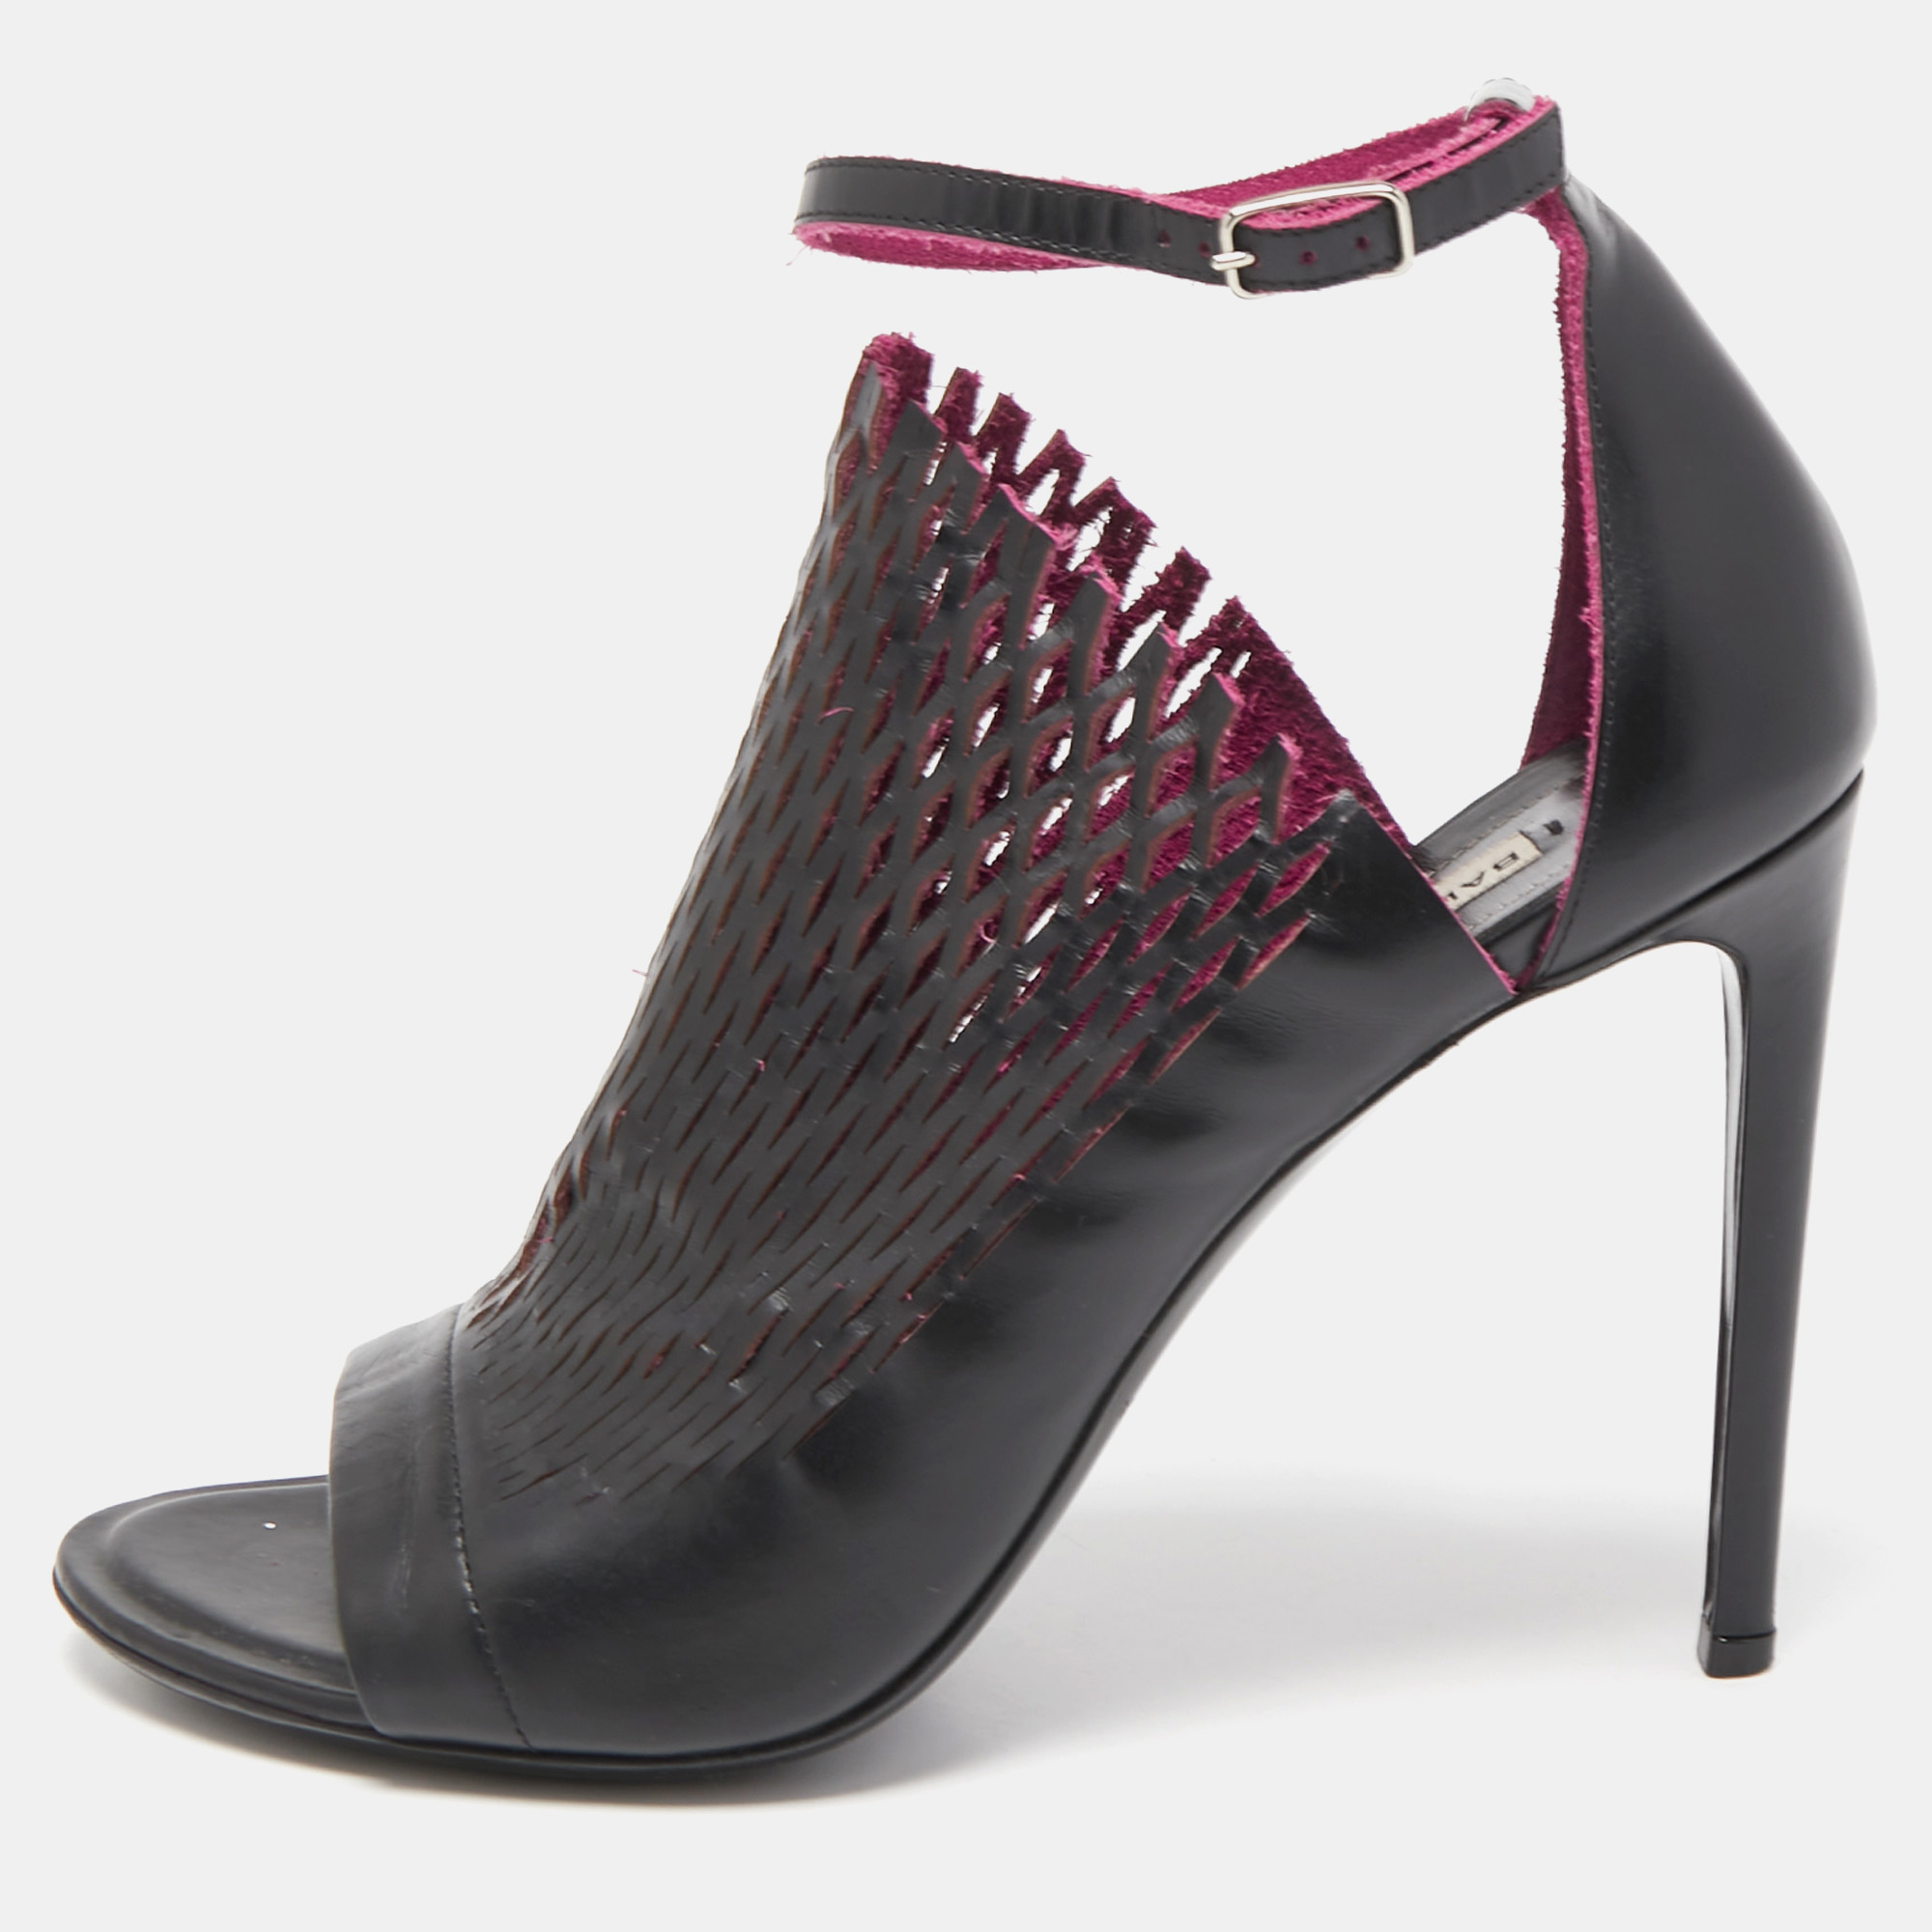 Balenciaga Black/Pink Lasercuts Leather Glove  Sandals Size 40